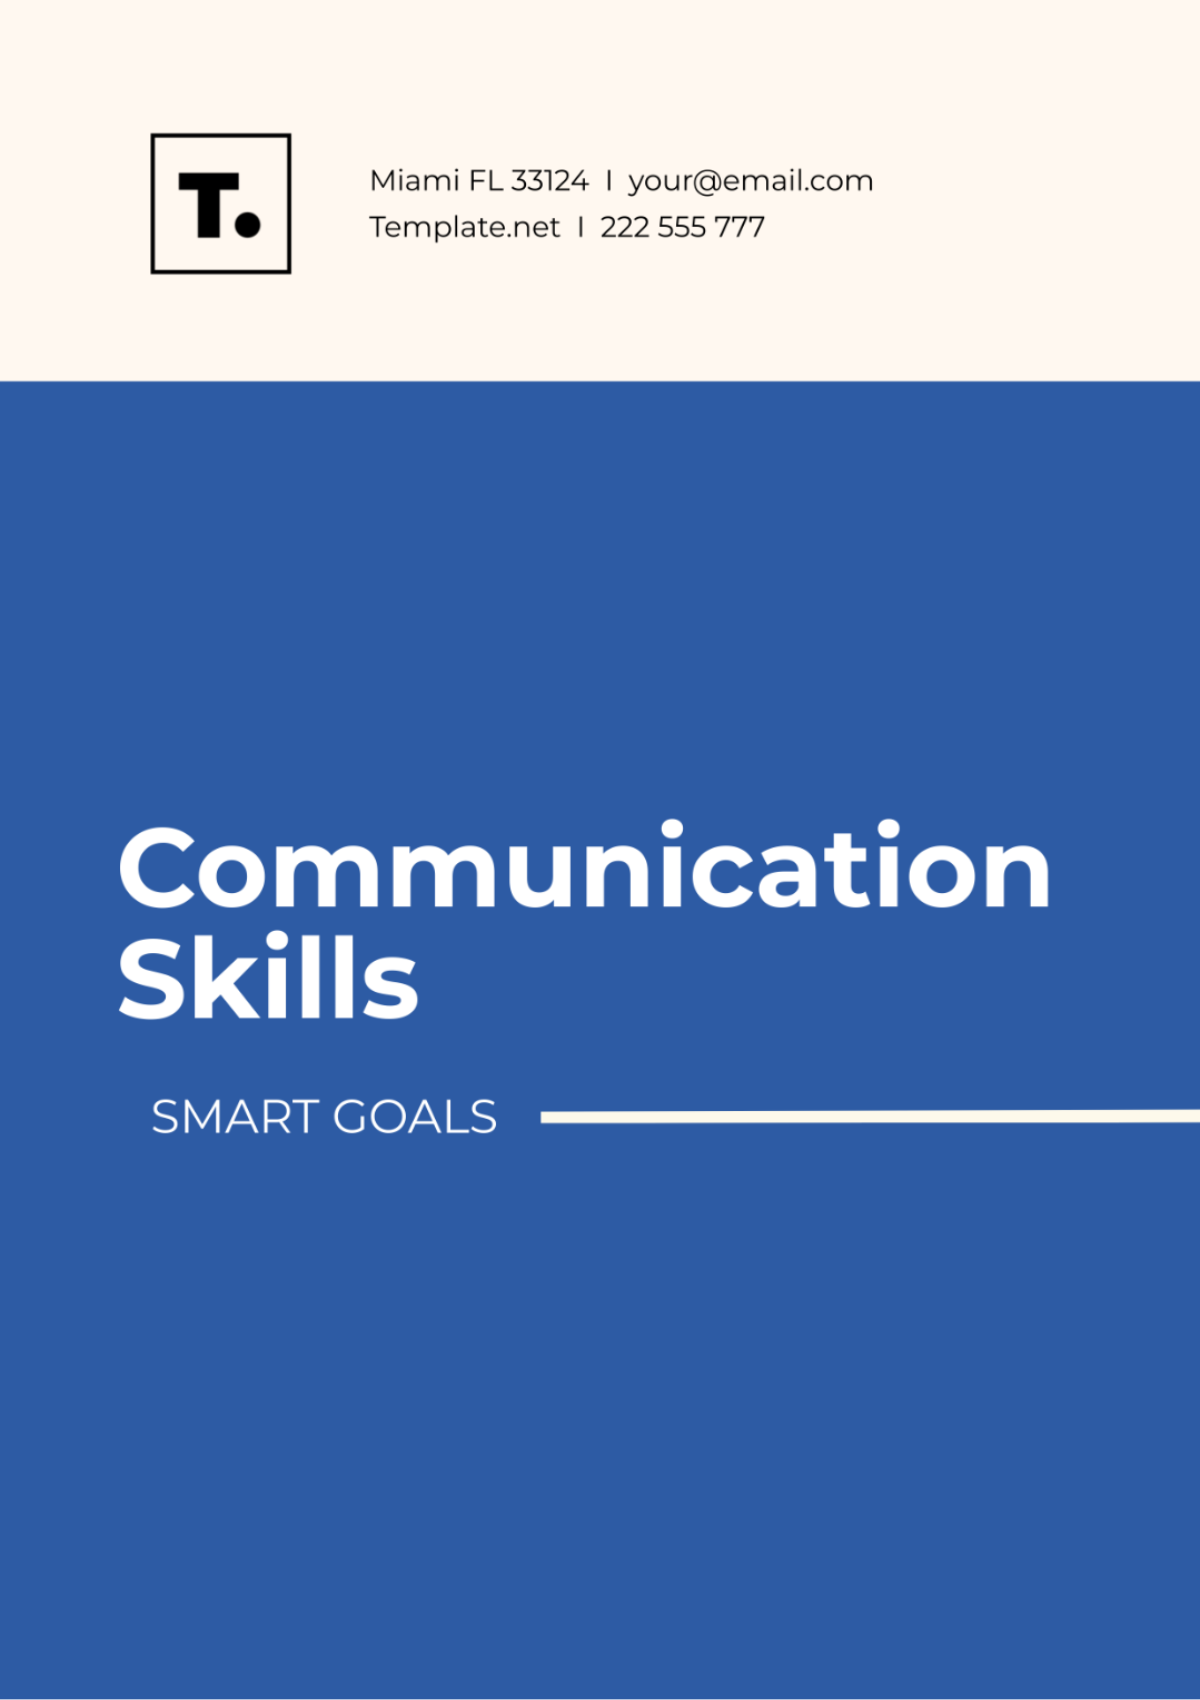 SMART Goals for Communication Skills Template